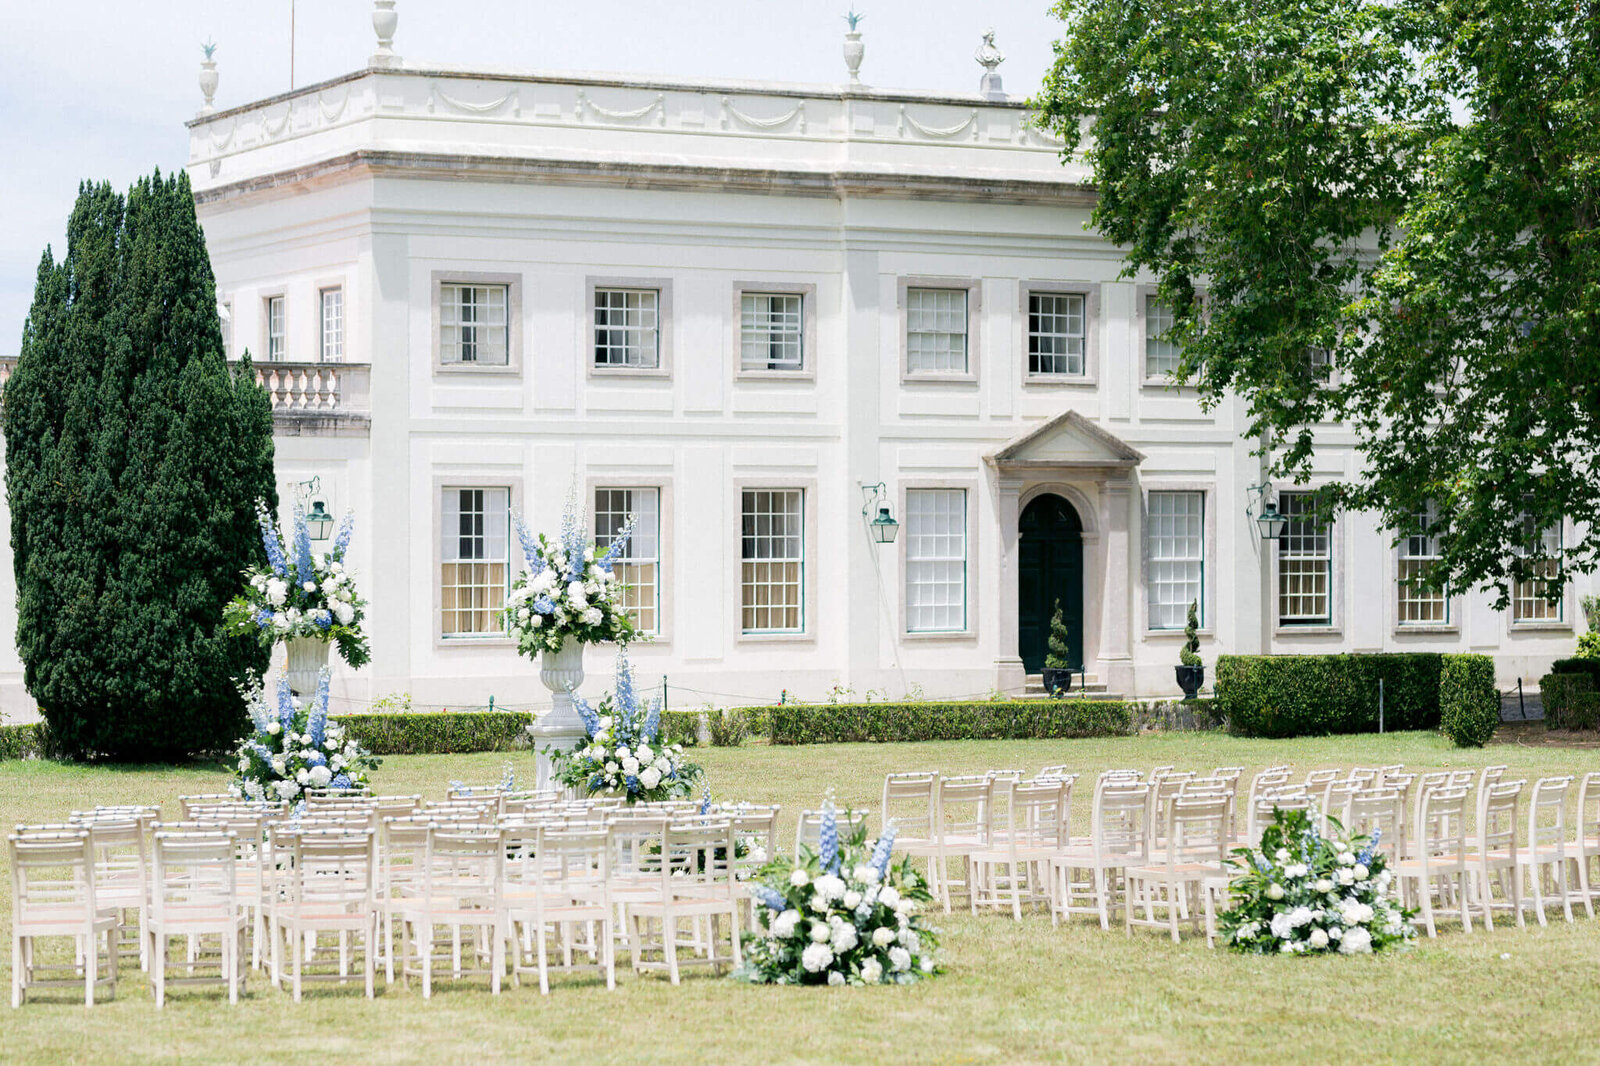 Blue and white floral wedidng reception at Palacio Tivoli Seteais , Portugal weddings